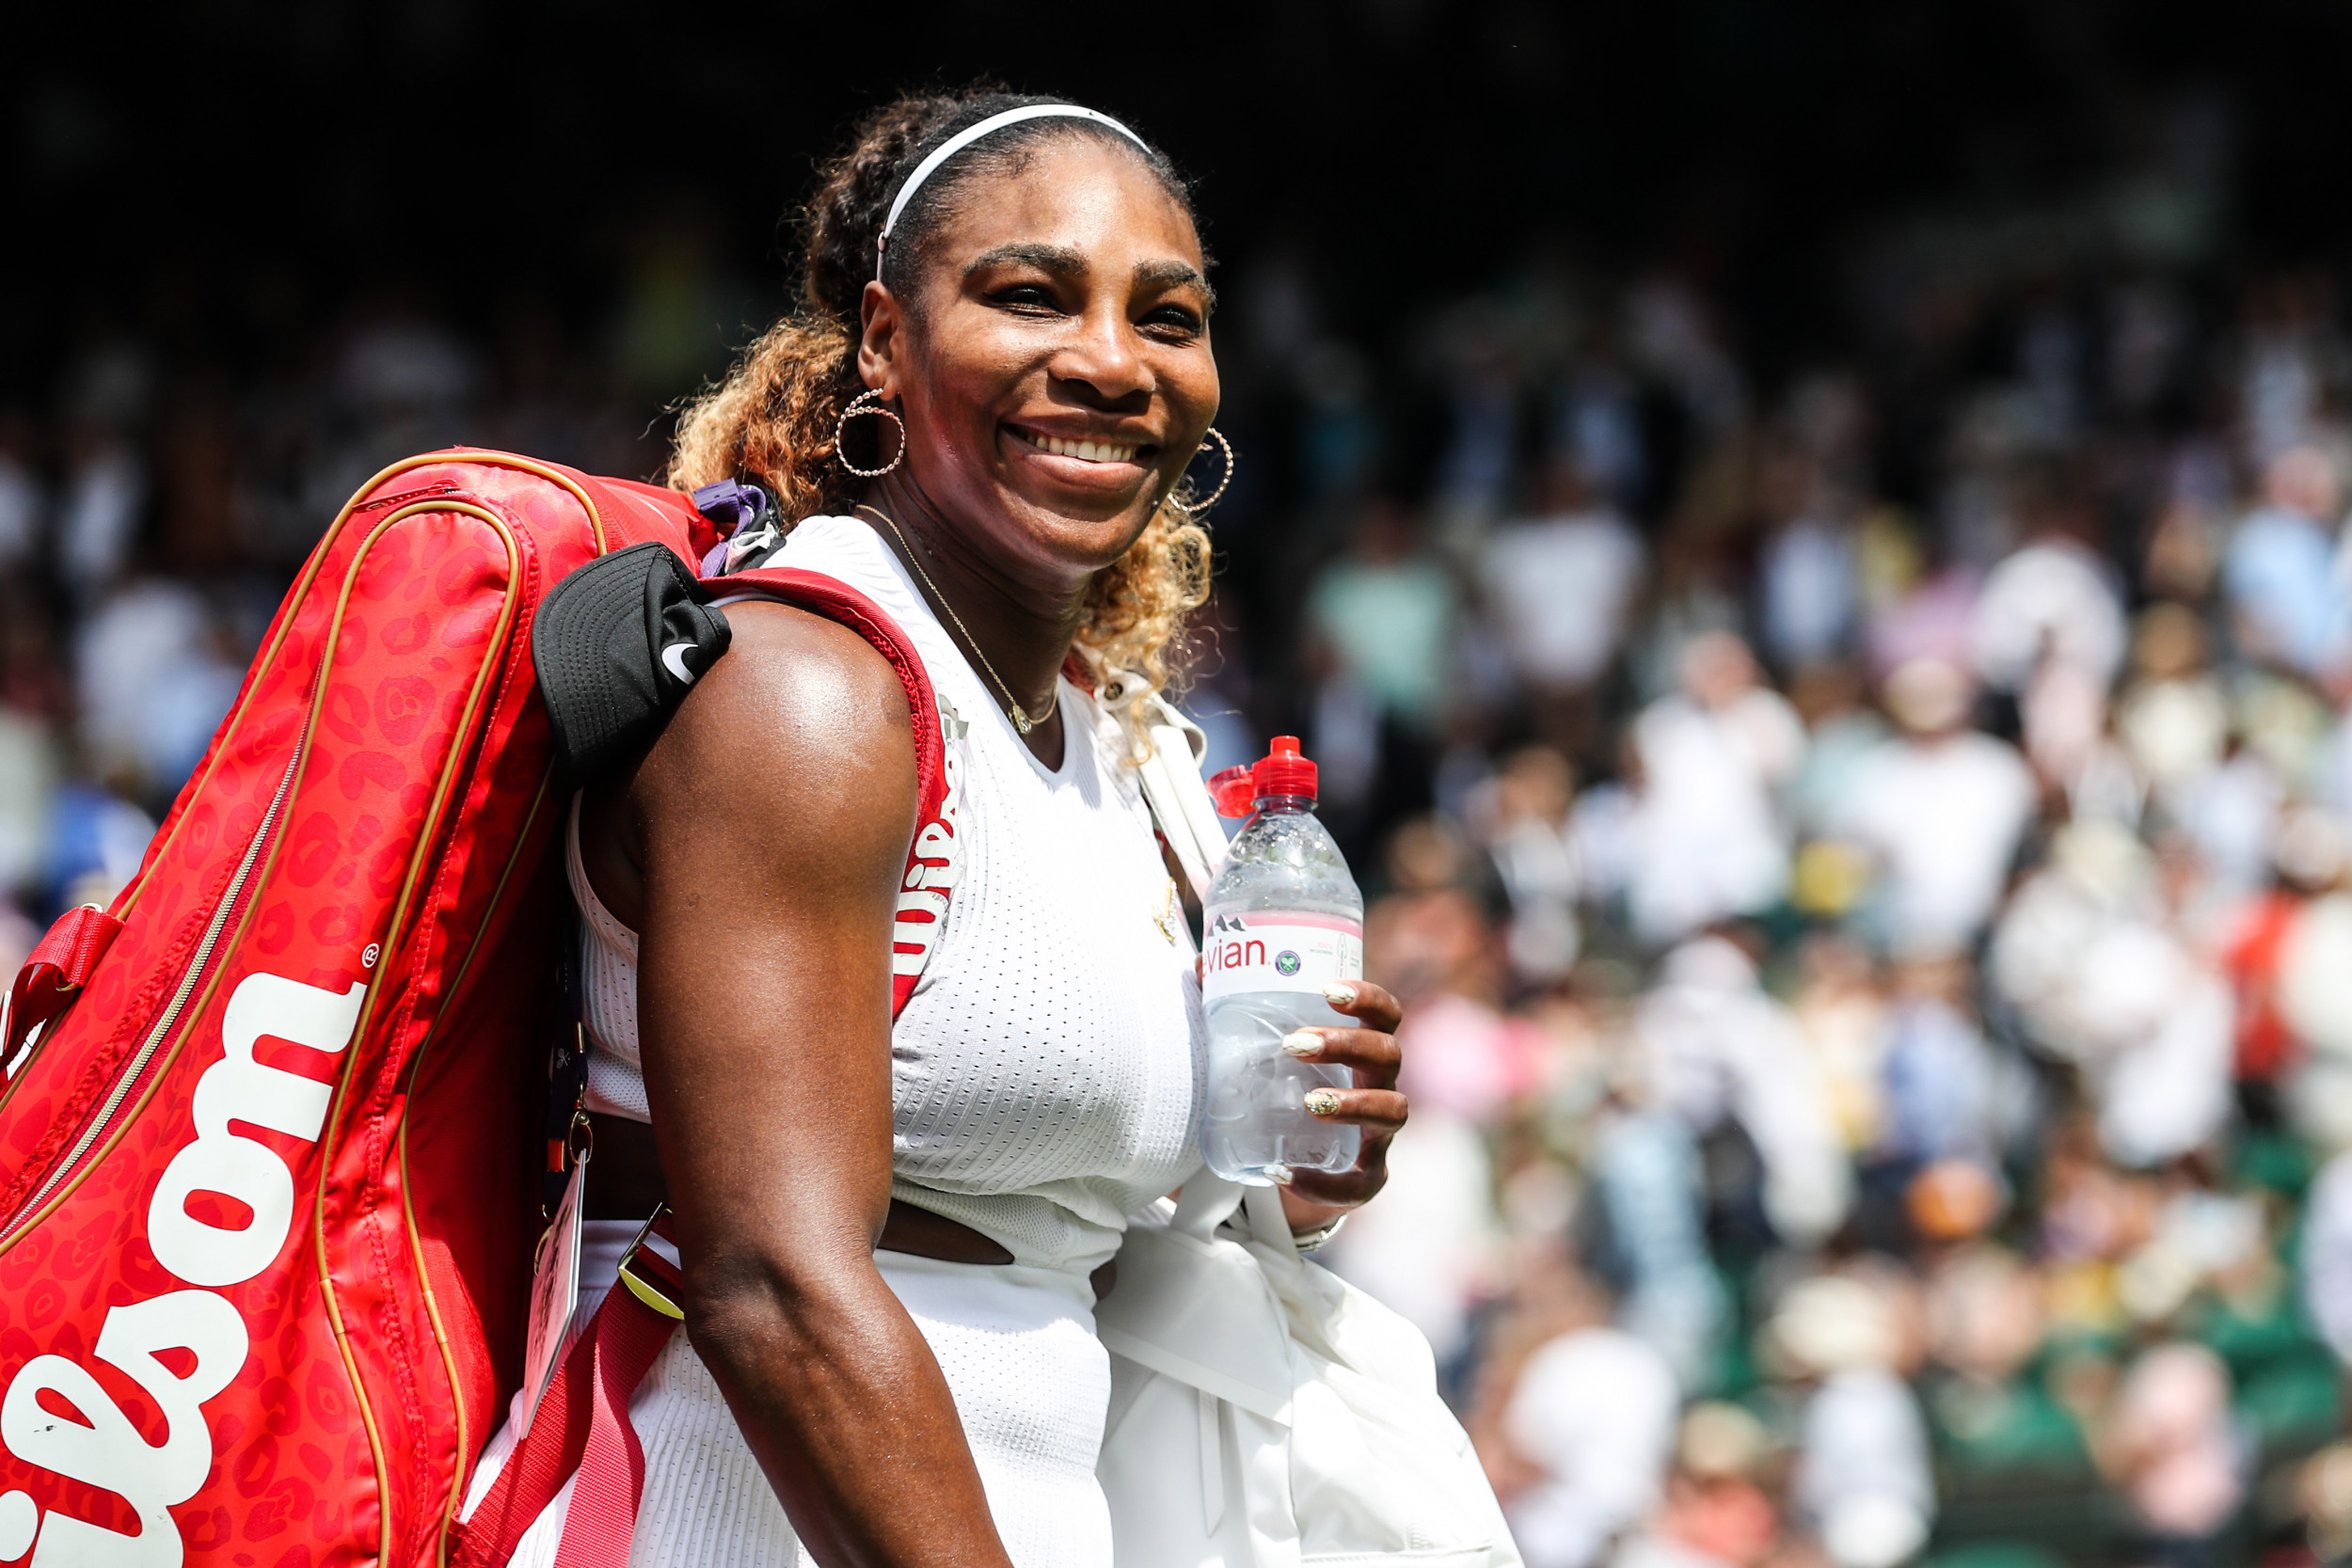 Wimbledon 2019 How to Watch Serena Williams Quarterfinal Match, Start time, Live Stream